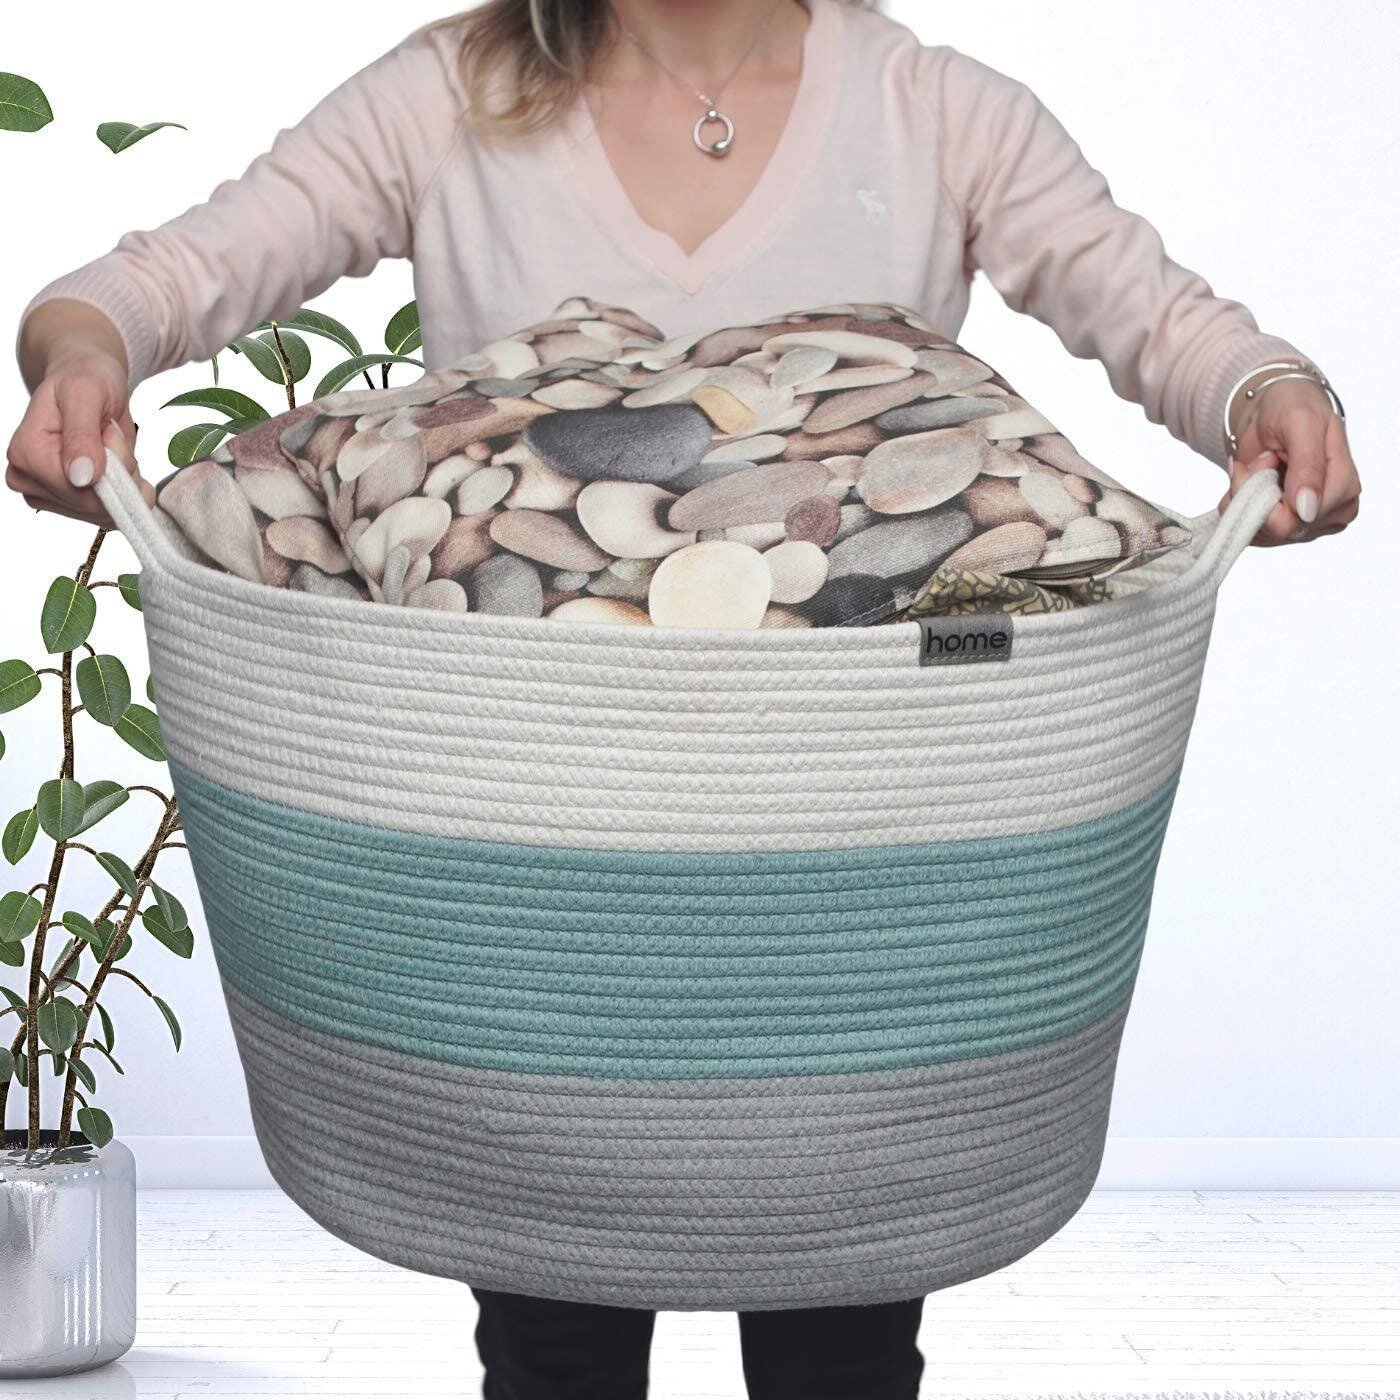 ICEBLUE HD White Storage Basket 100% Natural Cotton Rope Storage Boxes Toy Bins Childrens Room Decor